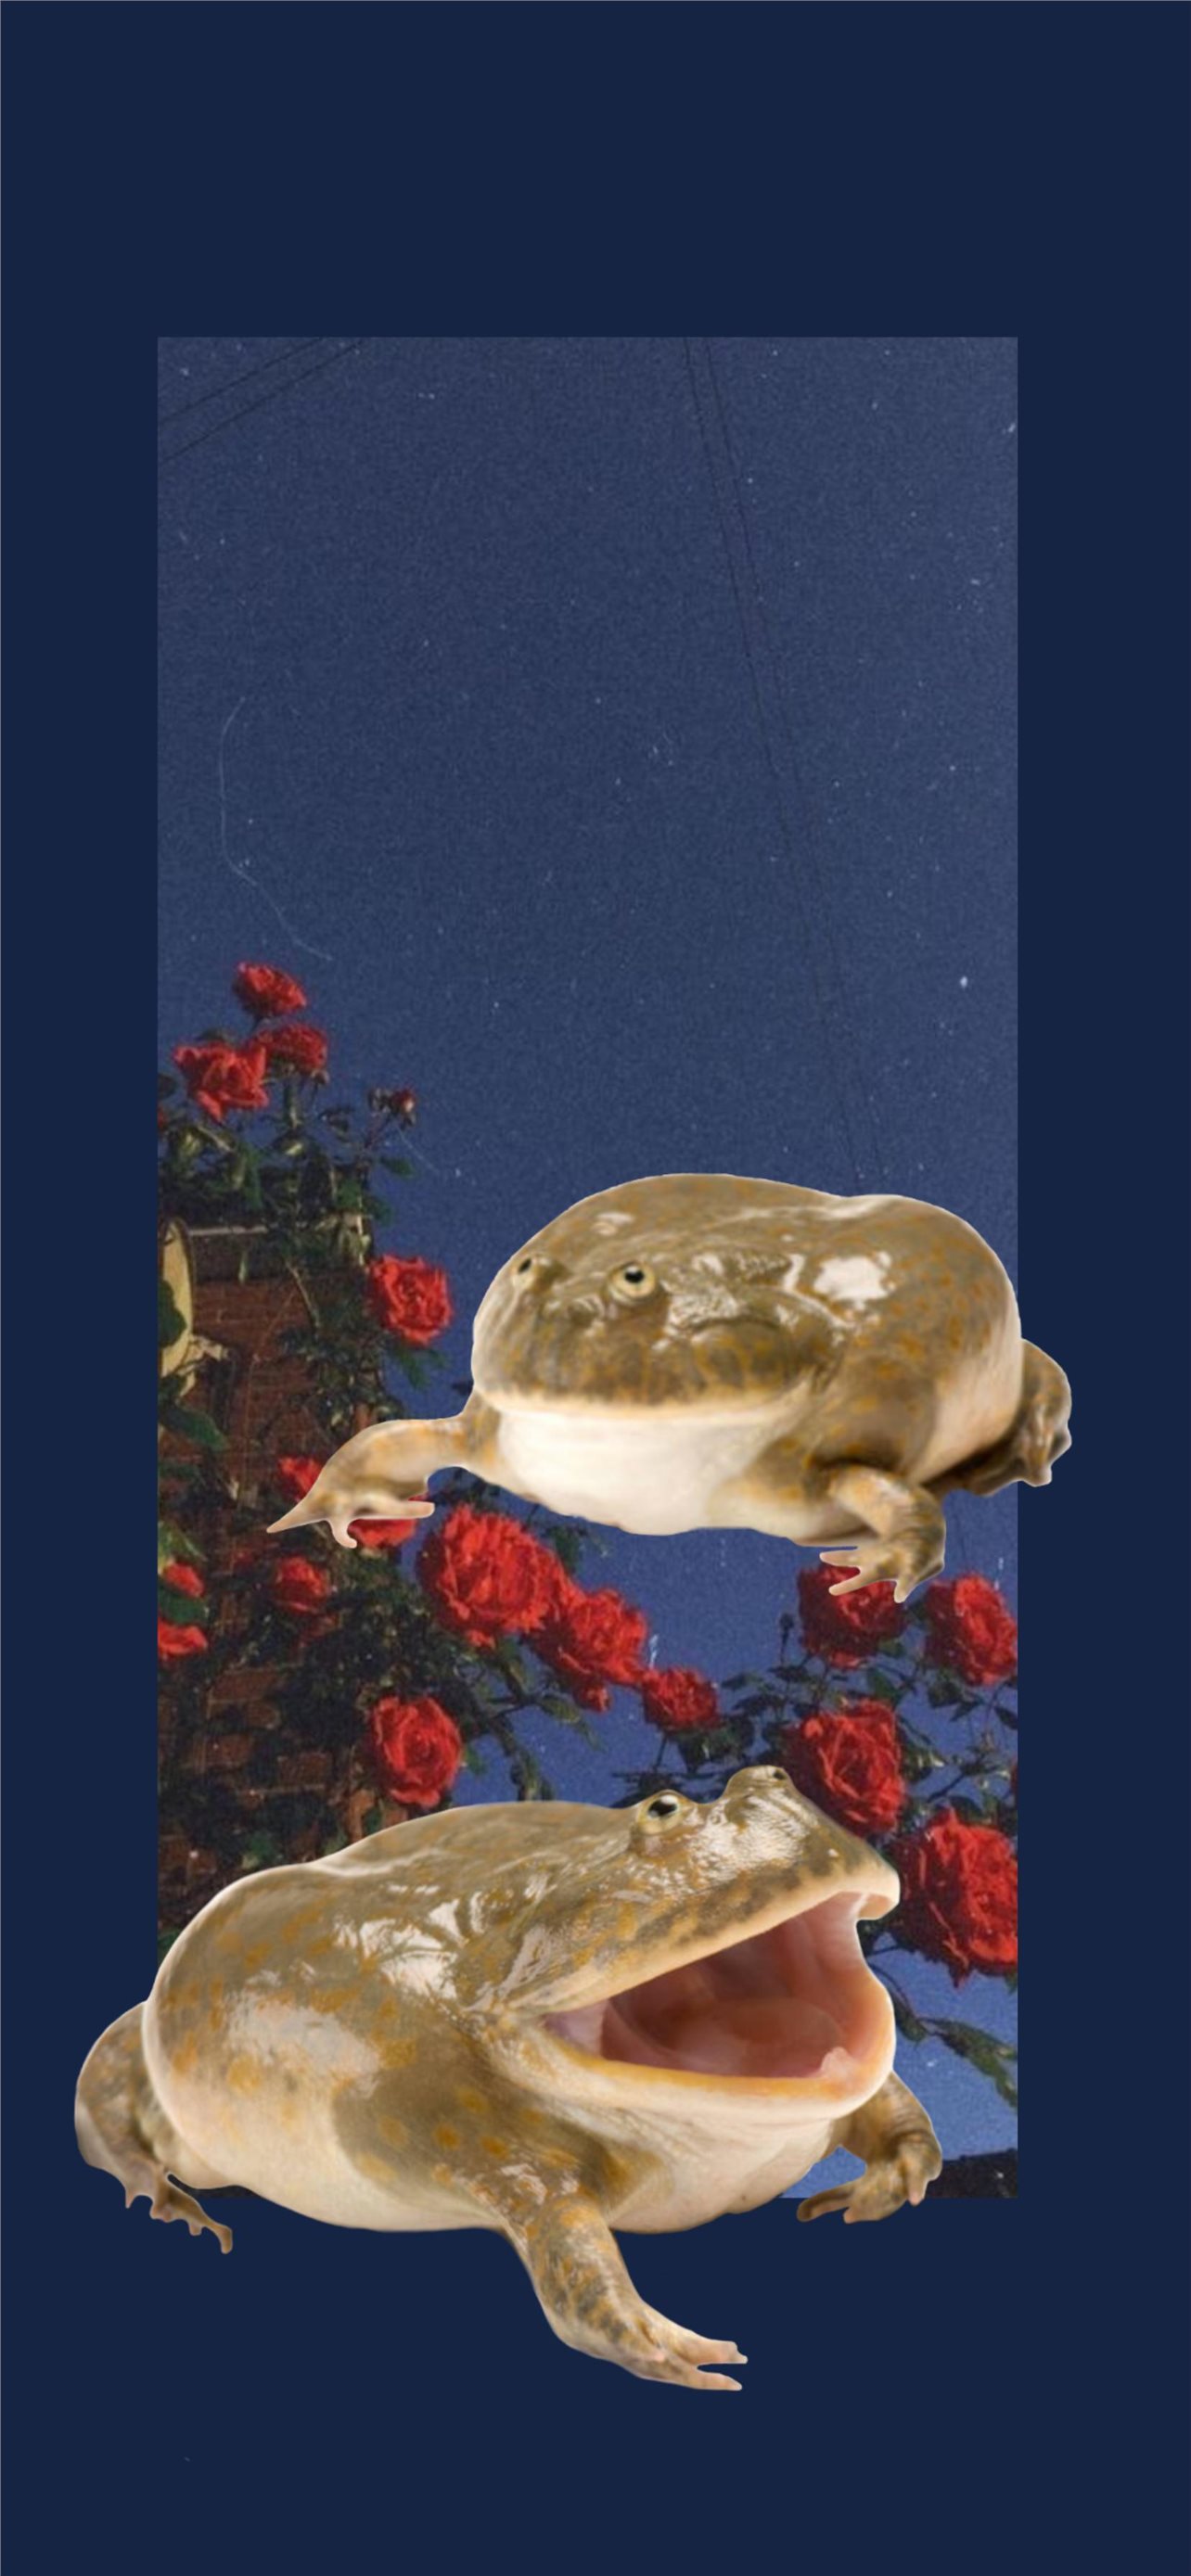 Best Toads iPhone HD Wallpaper